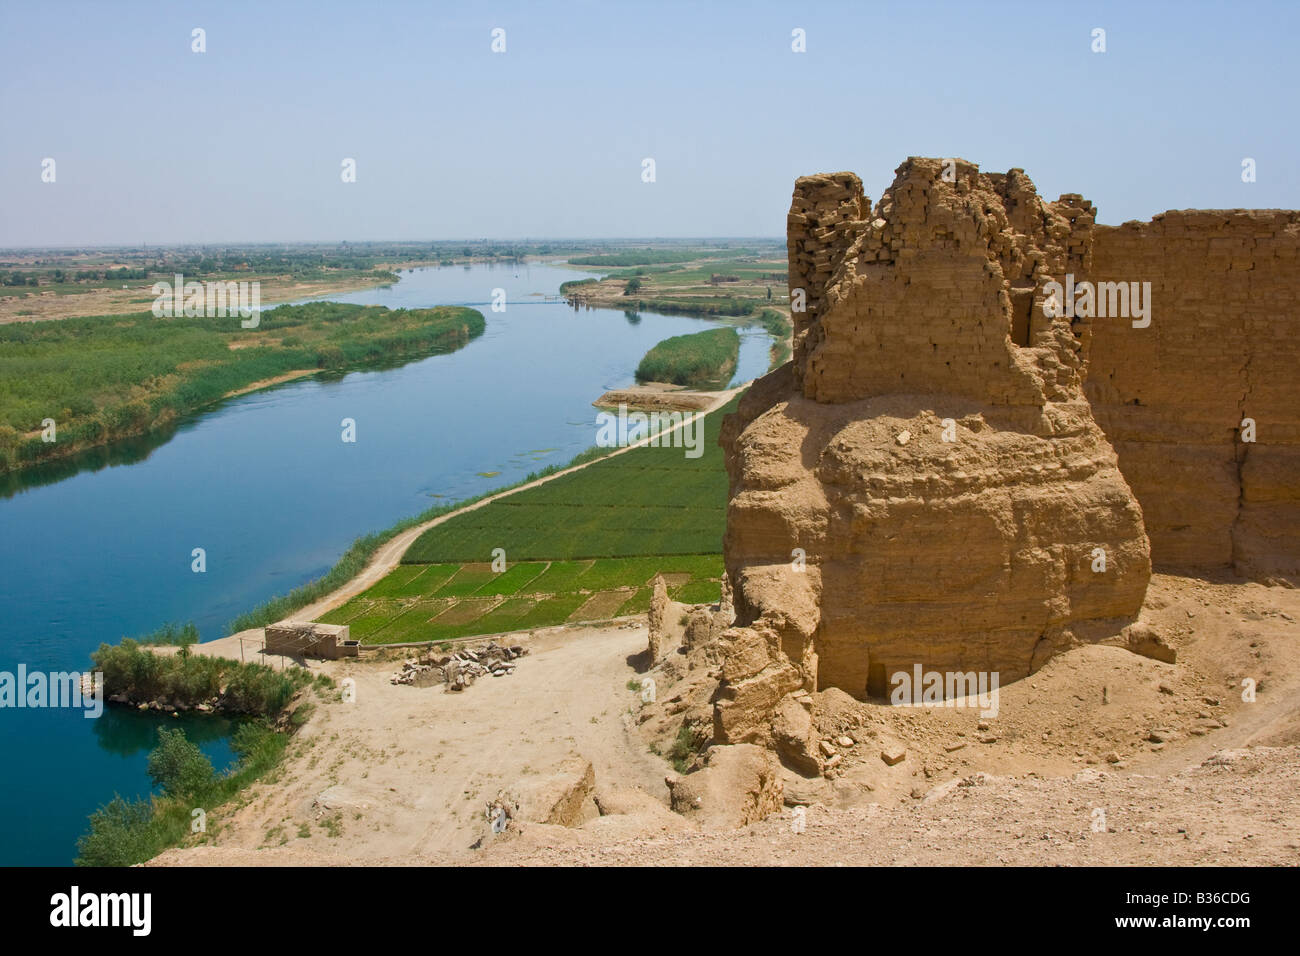 The Seleucid Ruins of Dura Europos on the Euphrates River in Syria Stock Photo